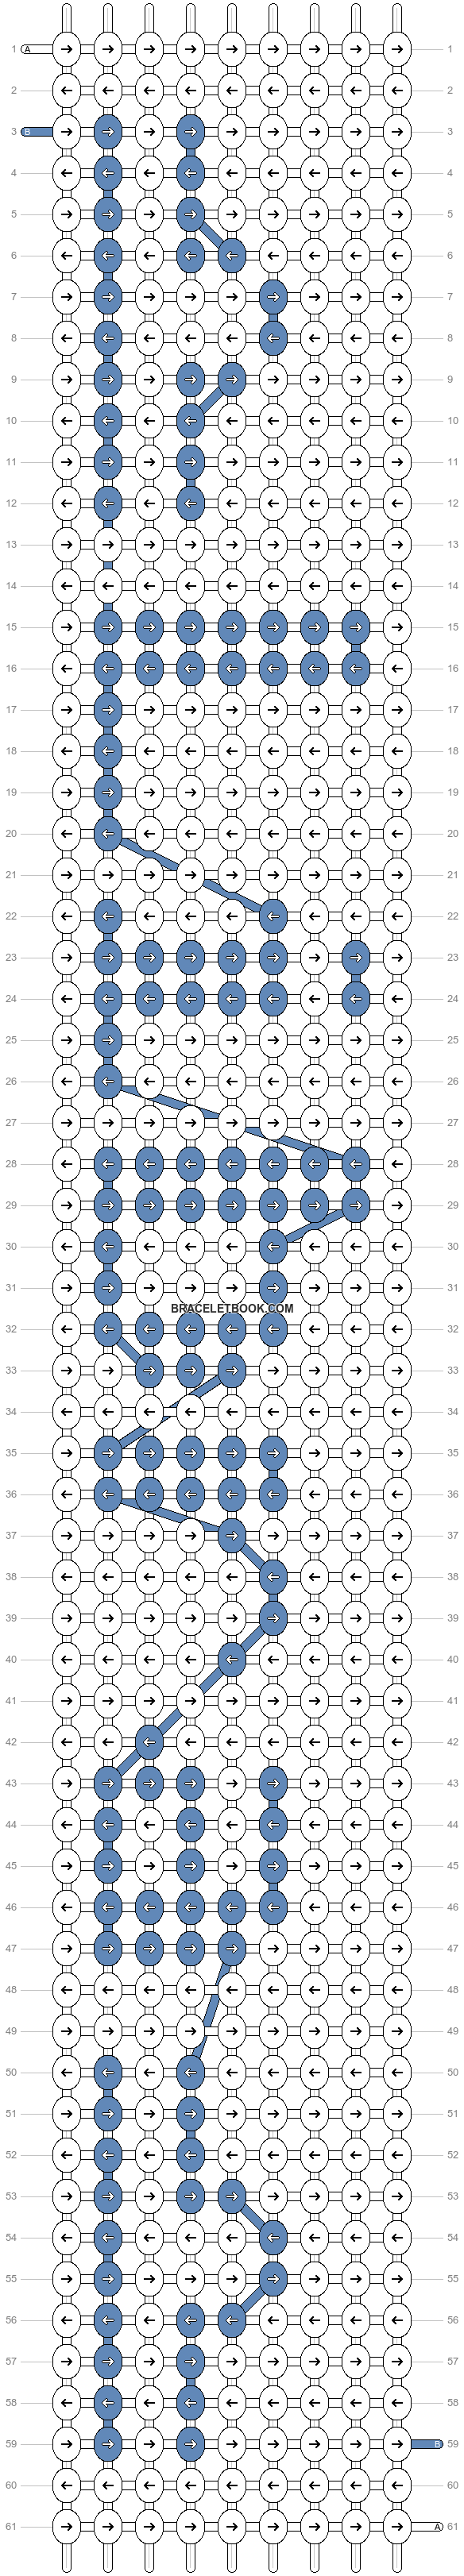 Alpha pattern #6170 variation #61257 pattern